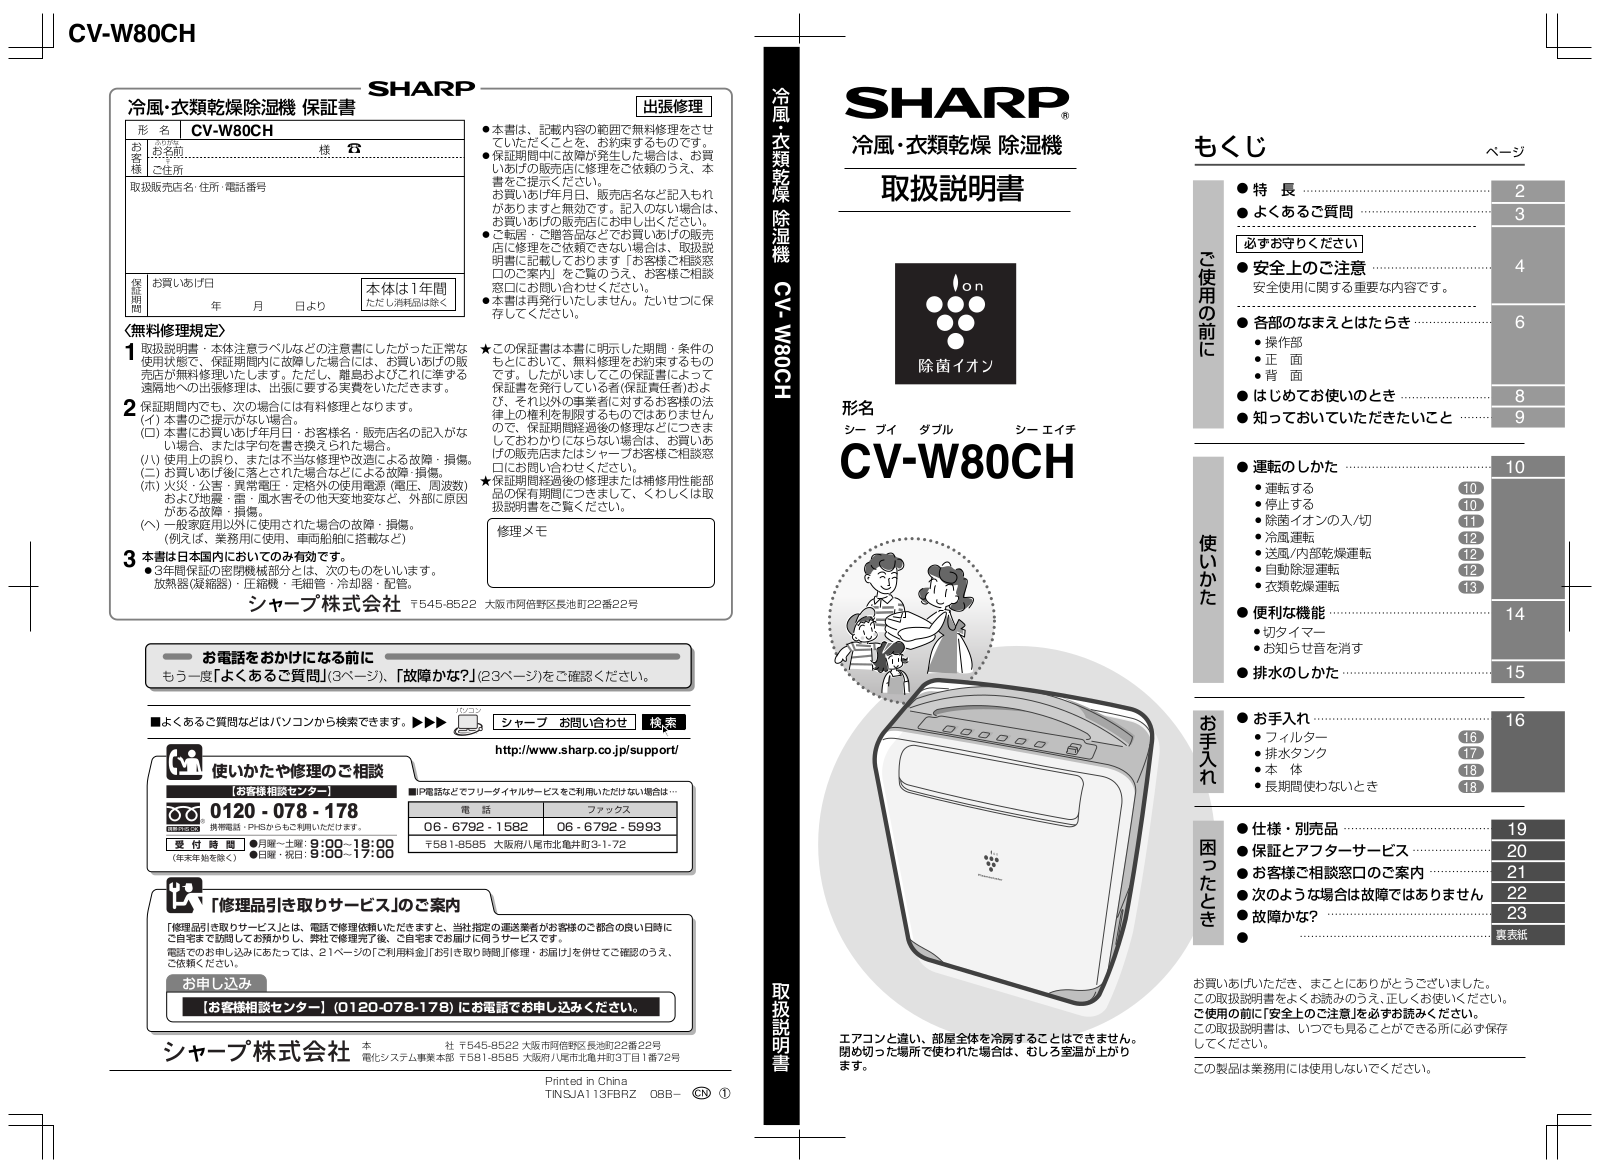 SHARP CV-W80CH User Manual